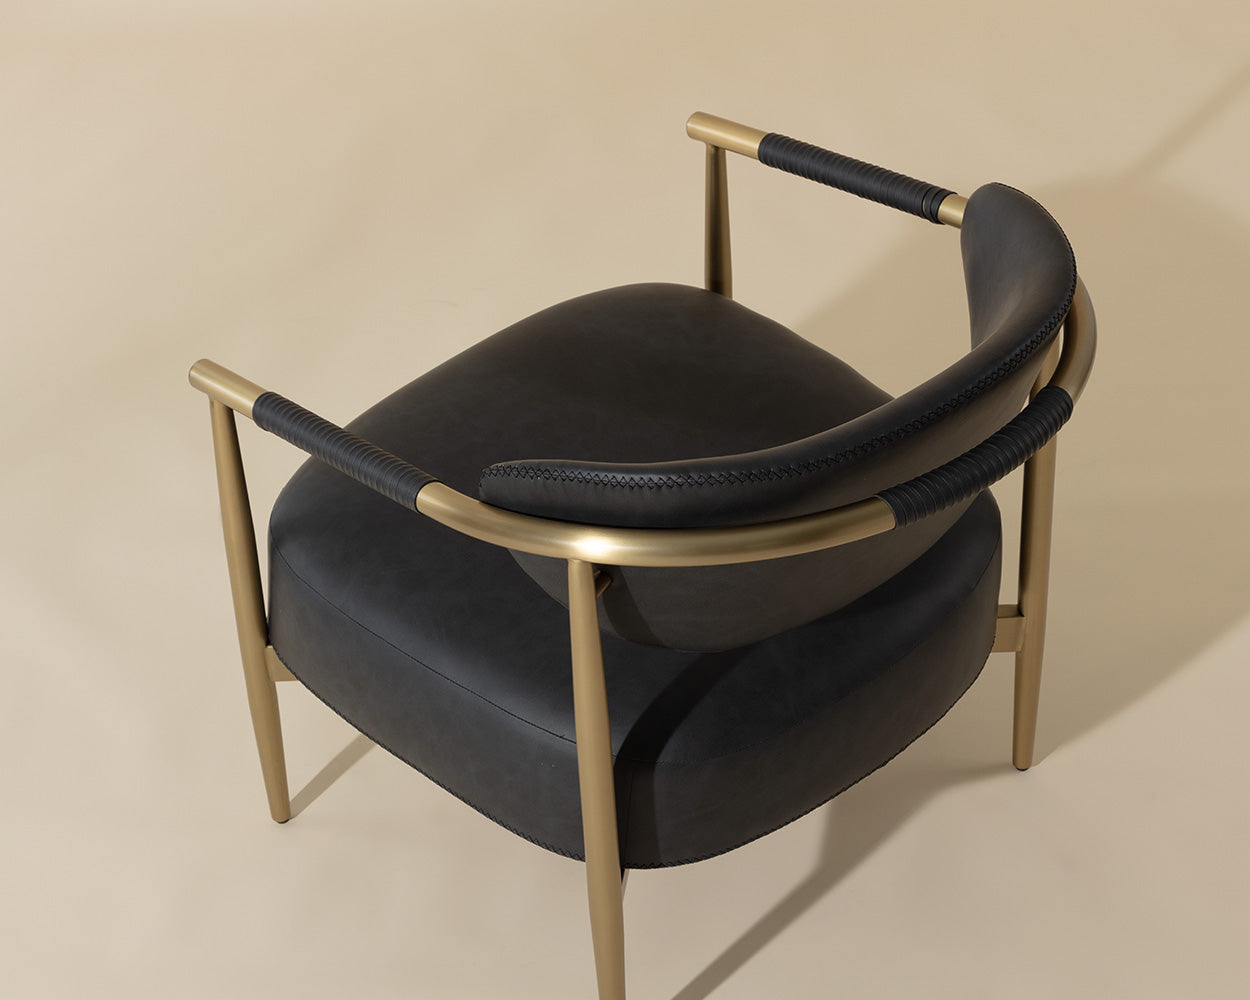 Heloise Lounge Chair